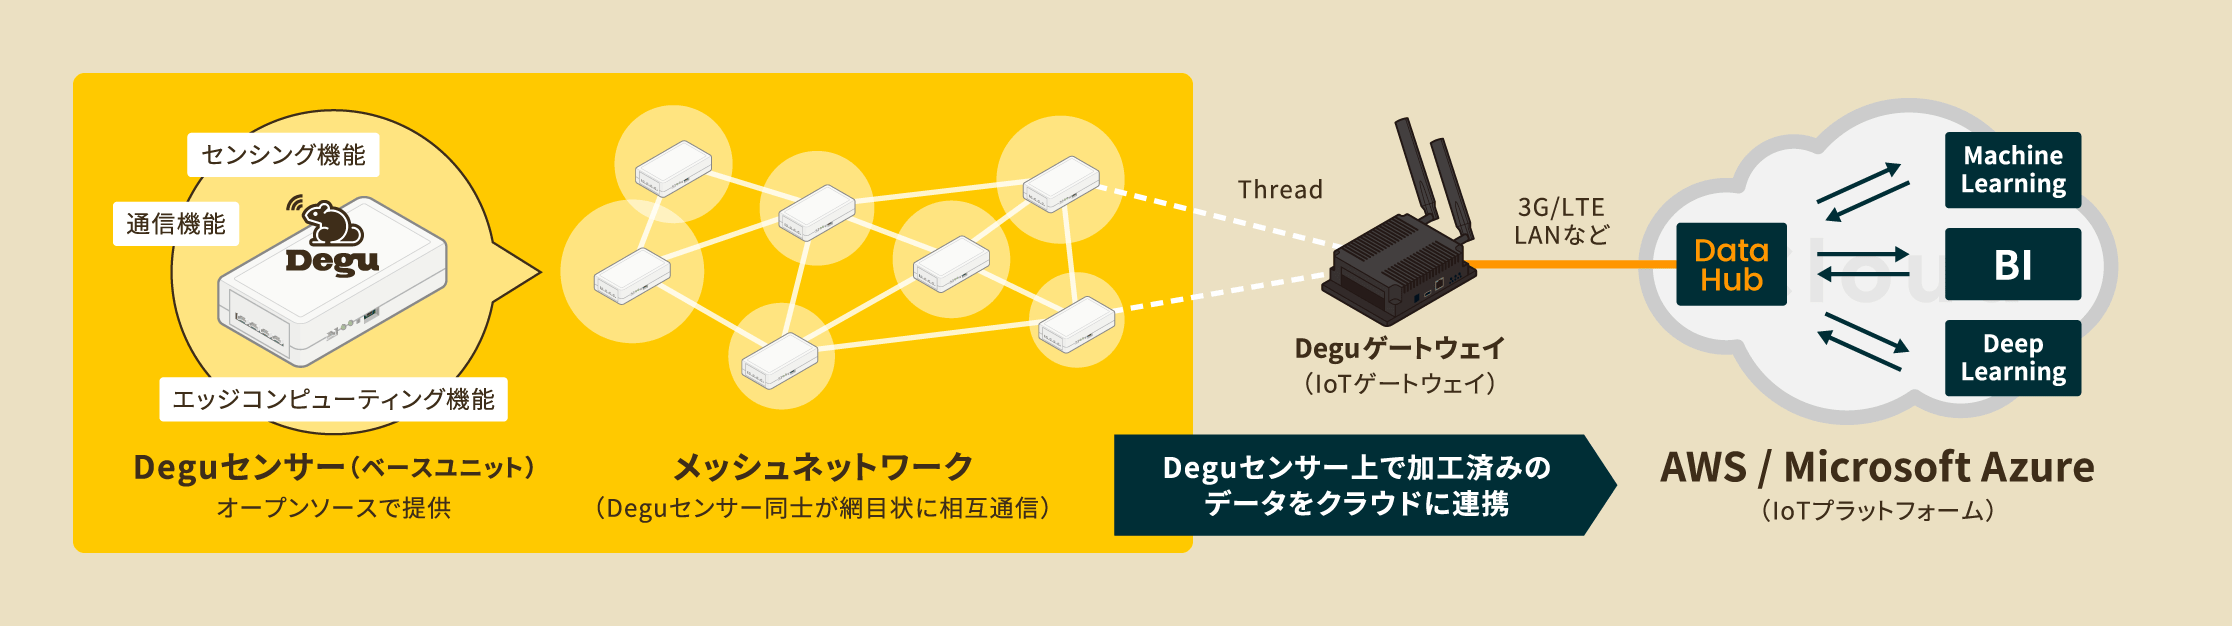 about_degu-g3_01